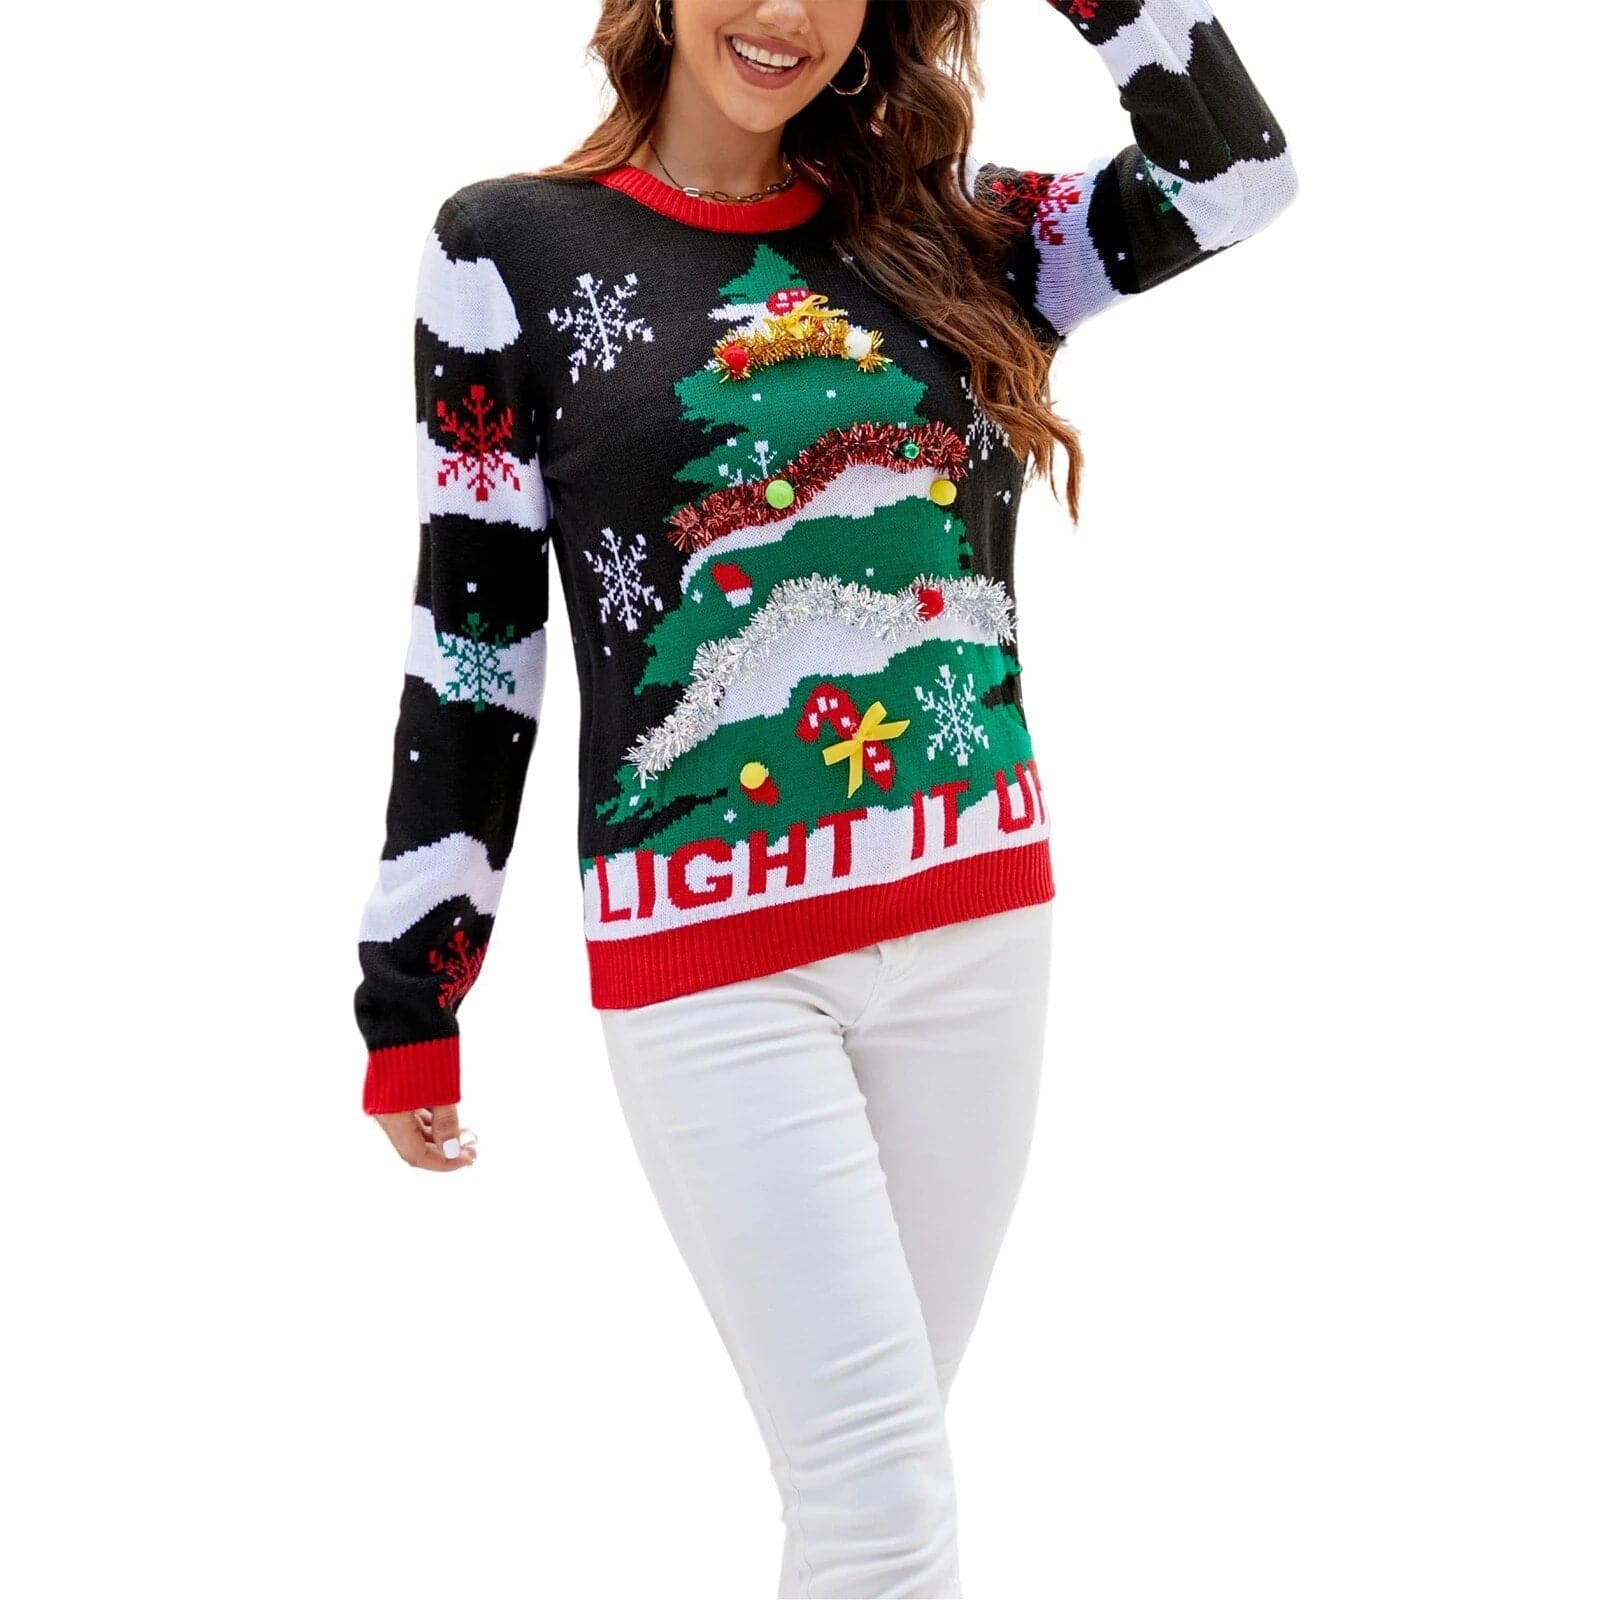 Dinosaur/Christmas Tree Print Sweater - Wandering Woman